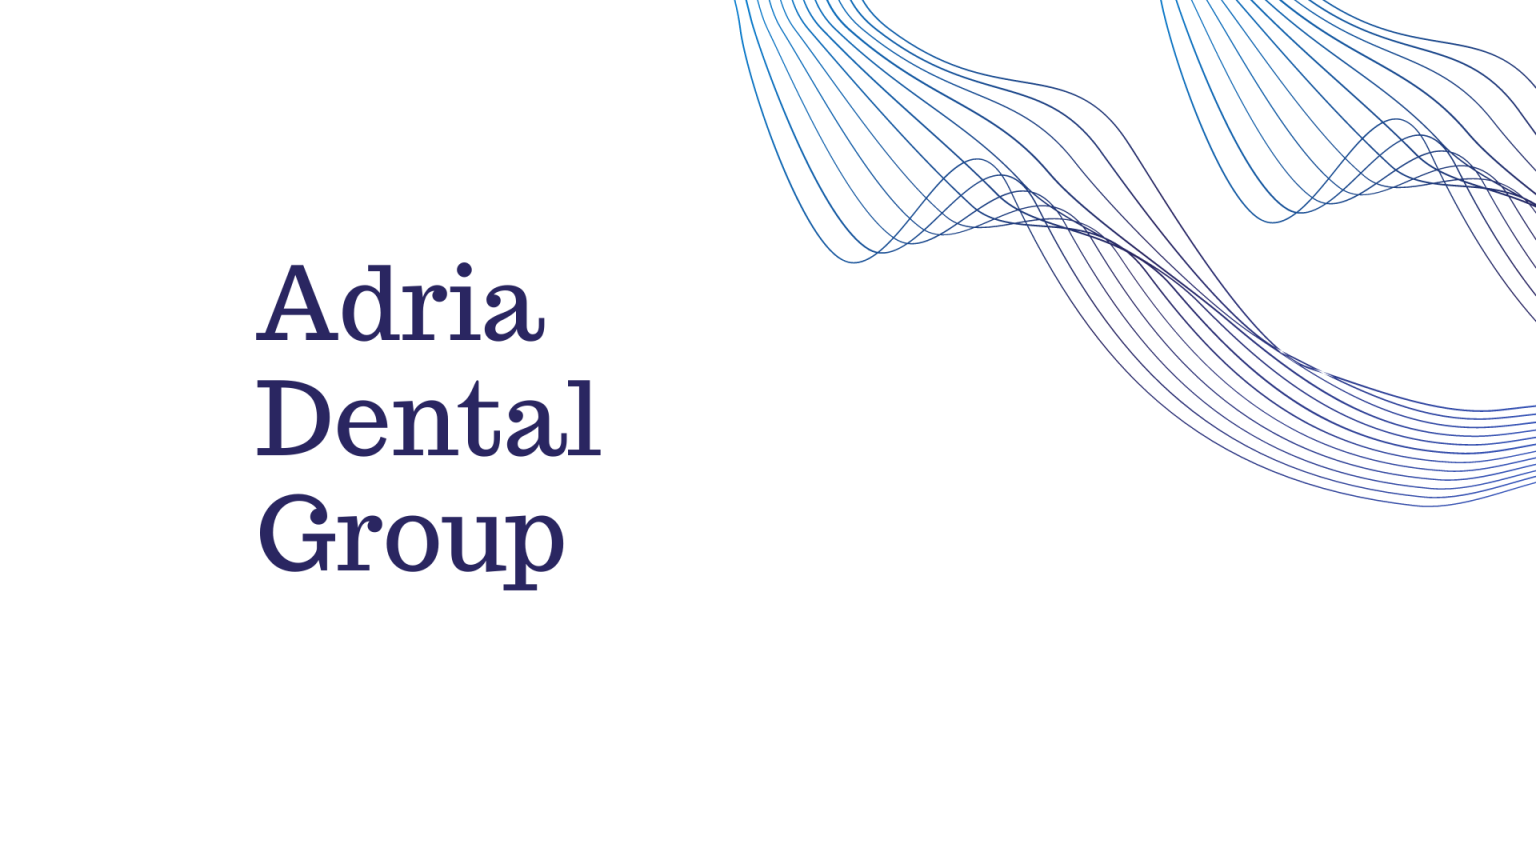 Adria Dental Group